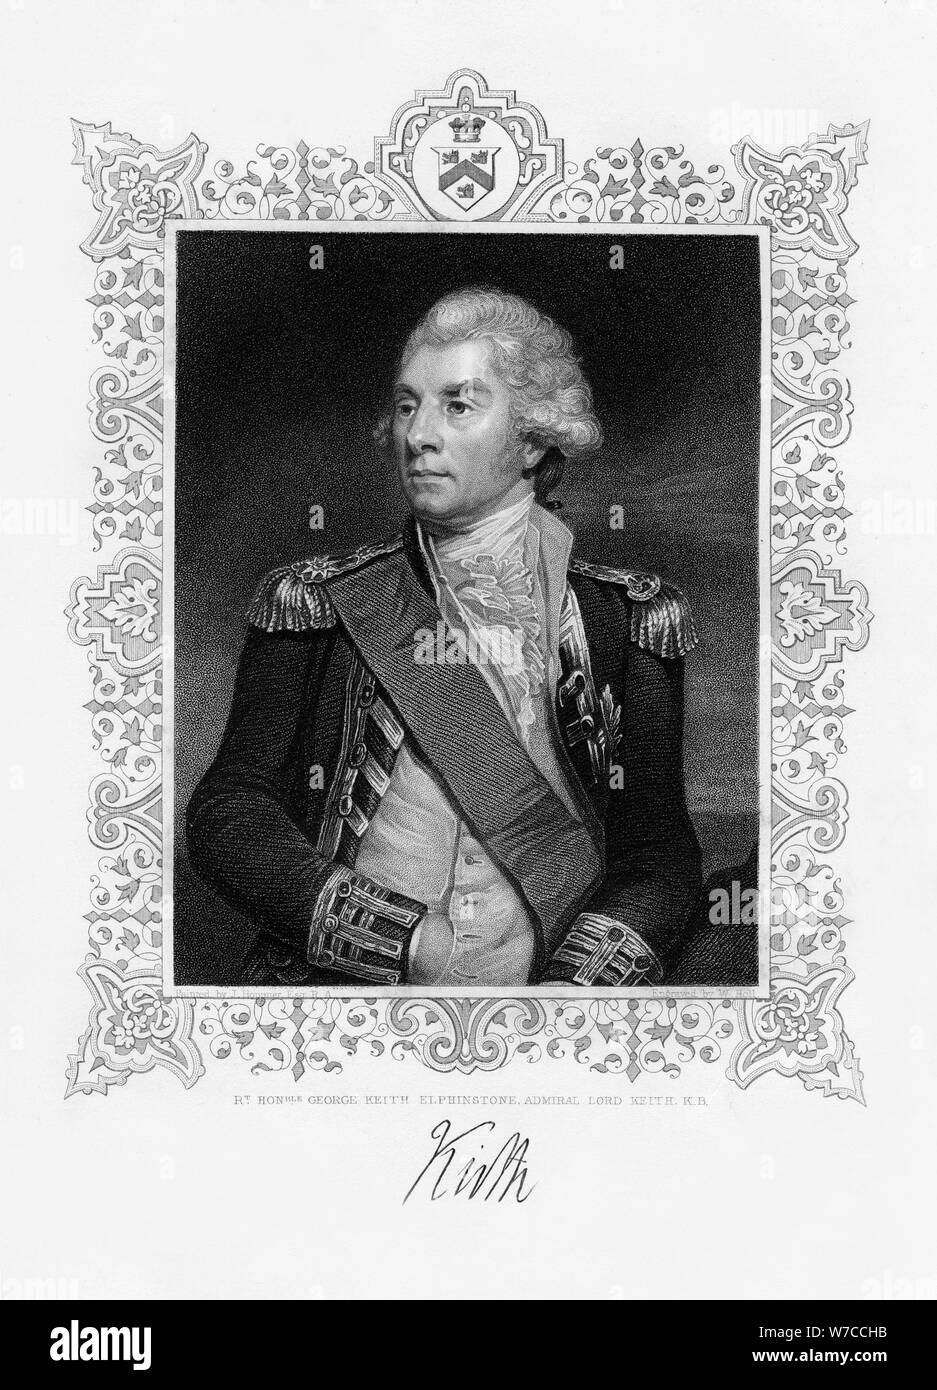 George Keith Elphinstone, 1st Viscount Keith, British admiral, 19th century.Artist: W Holl Stock Photo